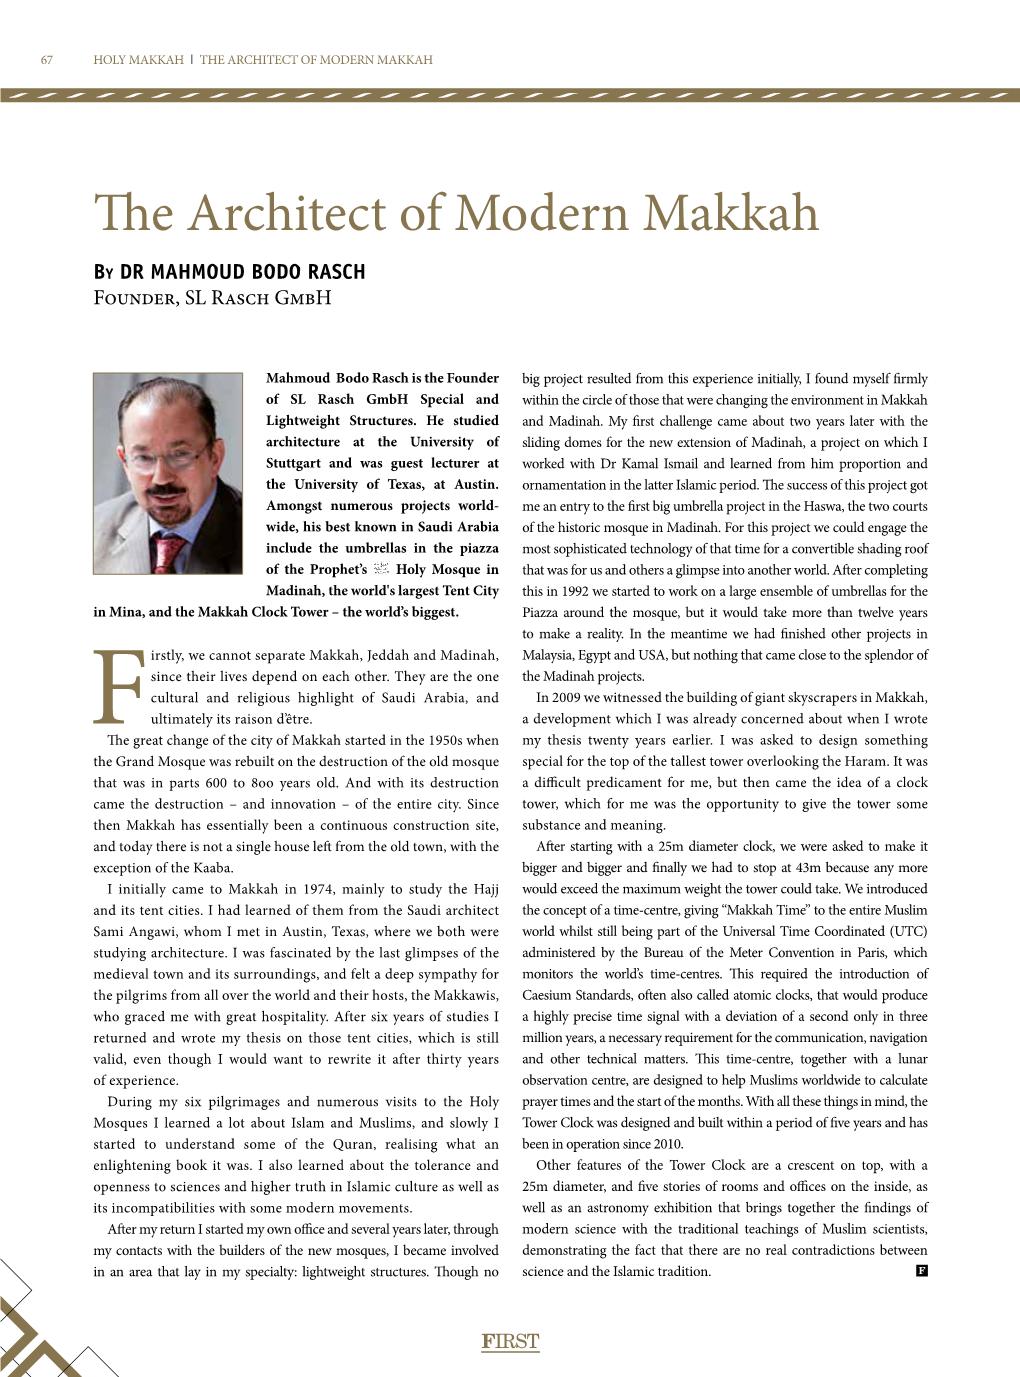 The Architect of Modern Makkah